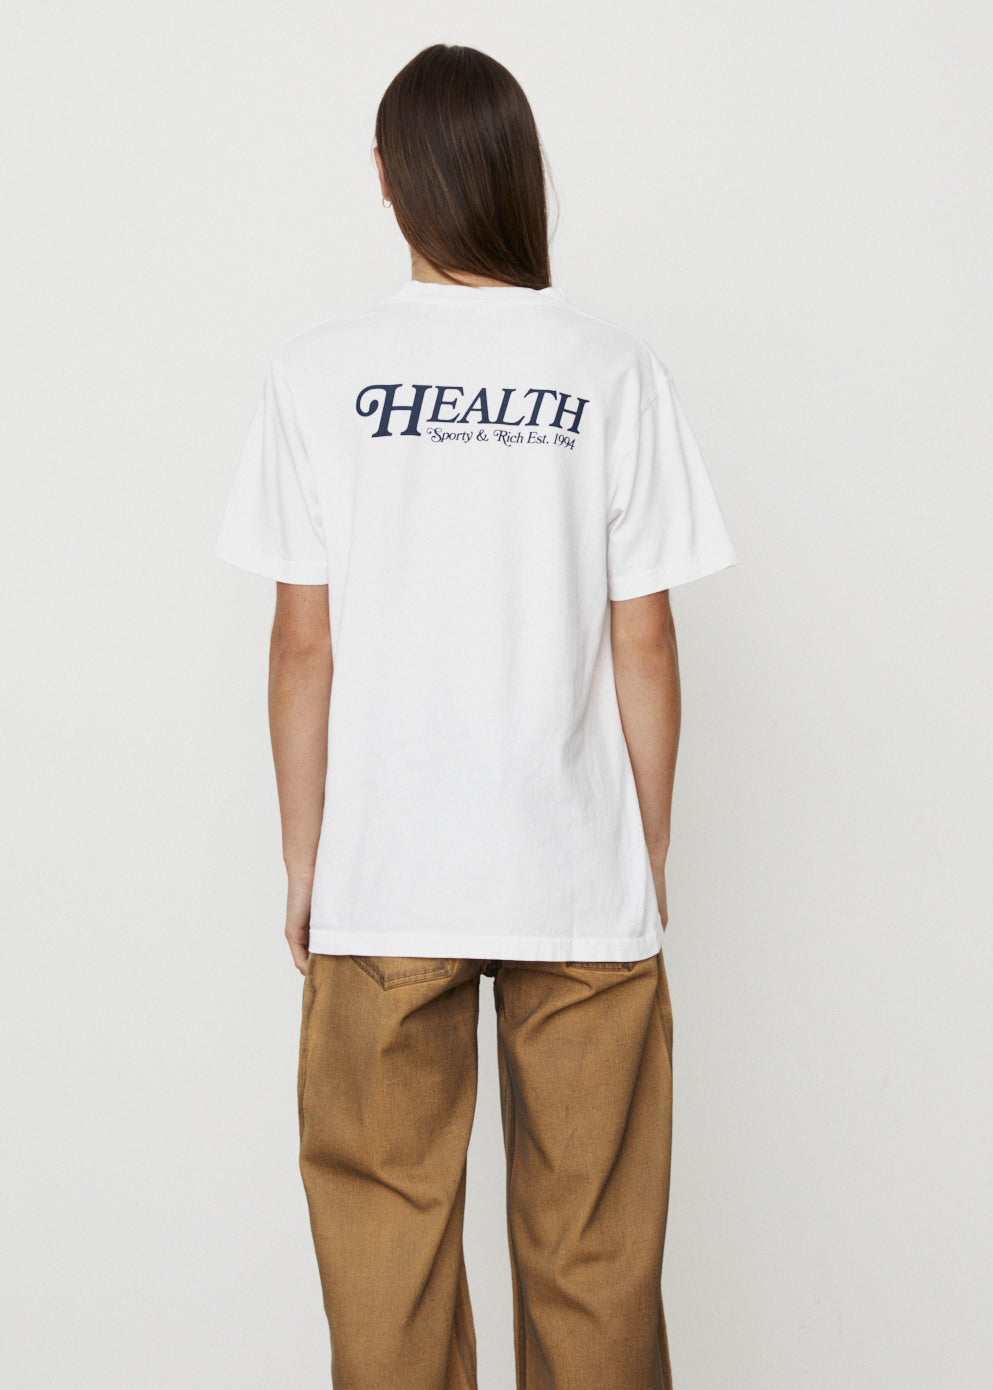 70s Health T-Shirt